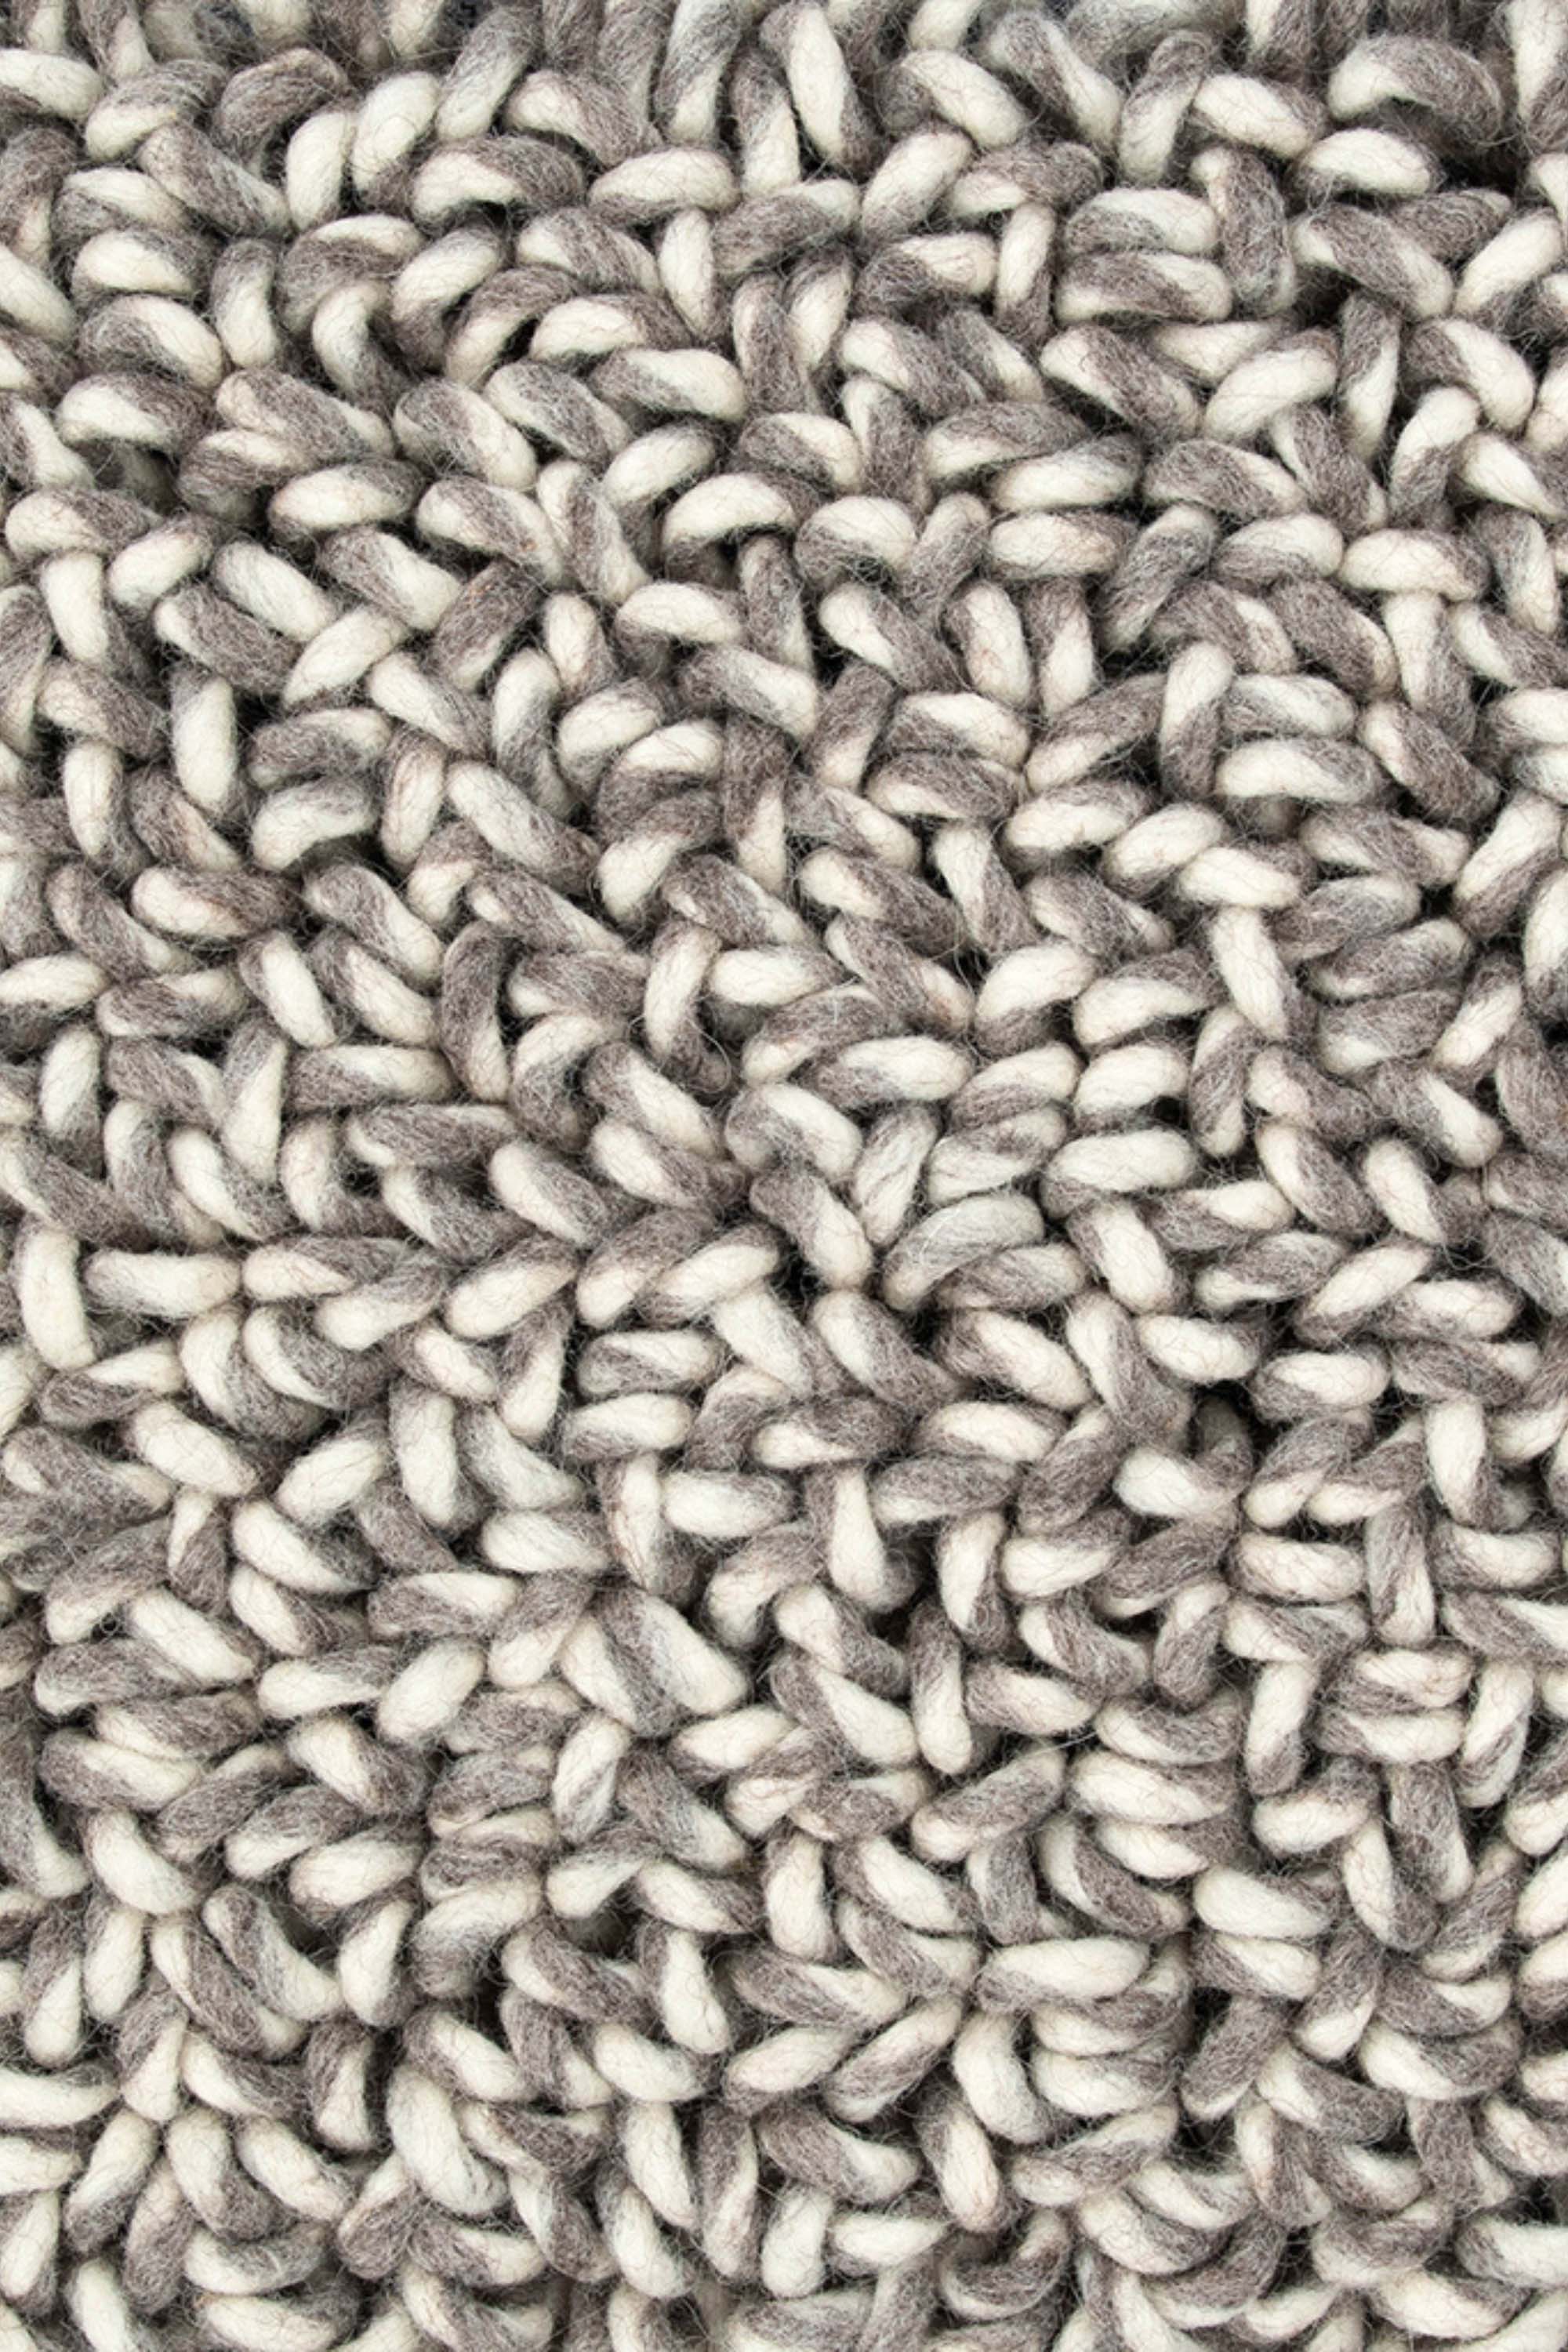 Plain dark grey rug with looped pile